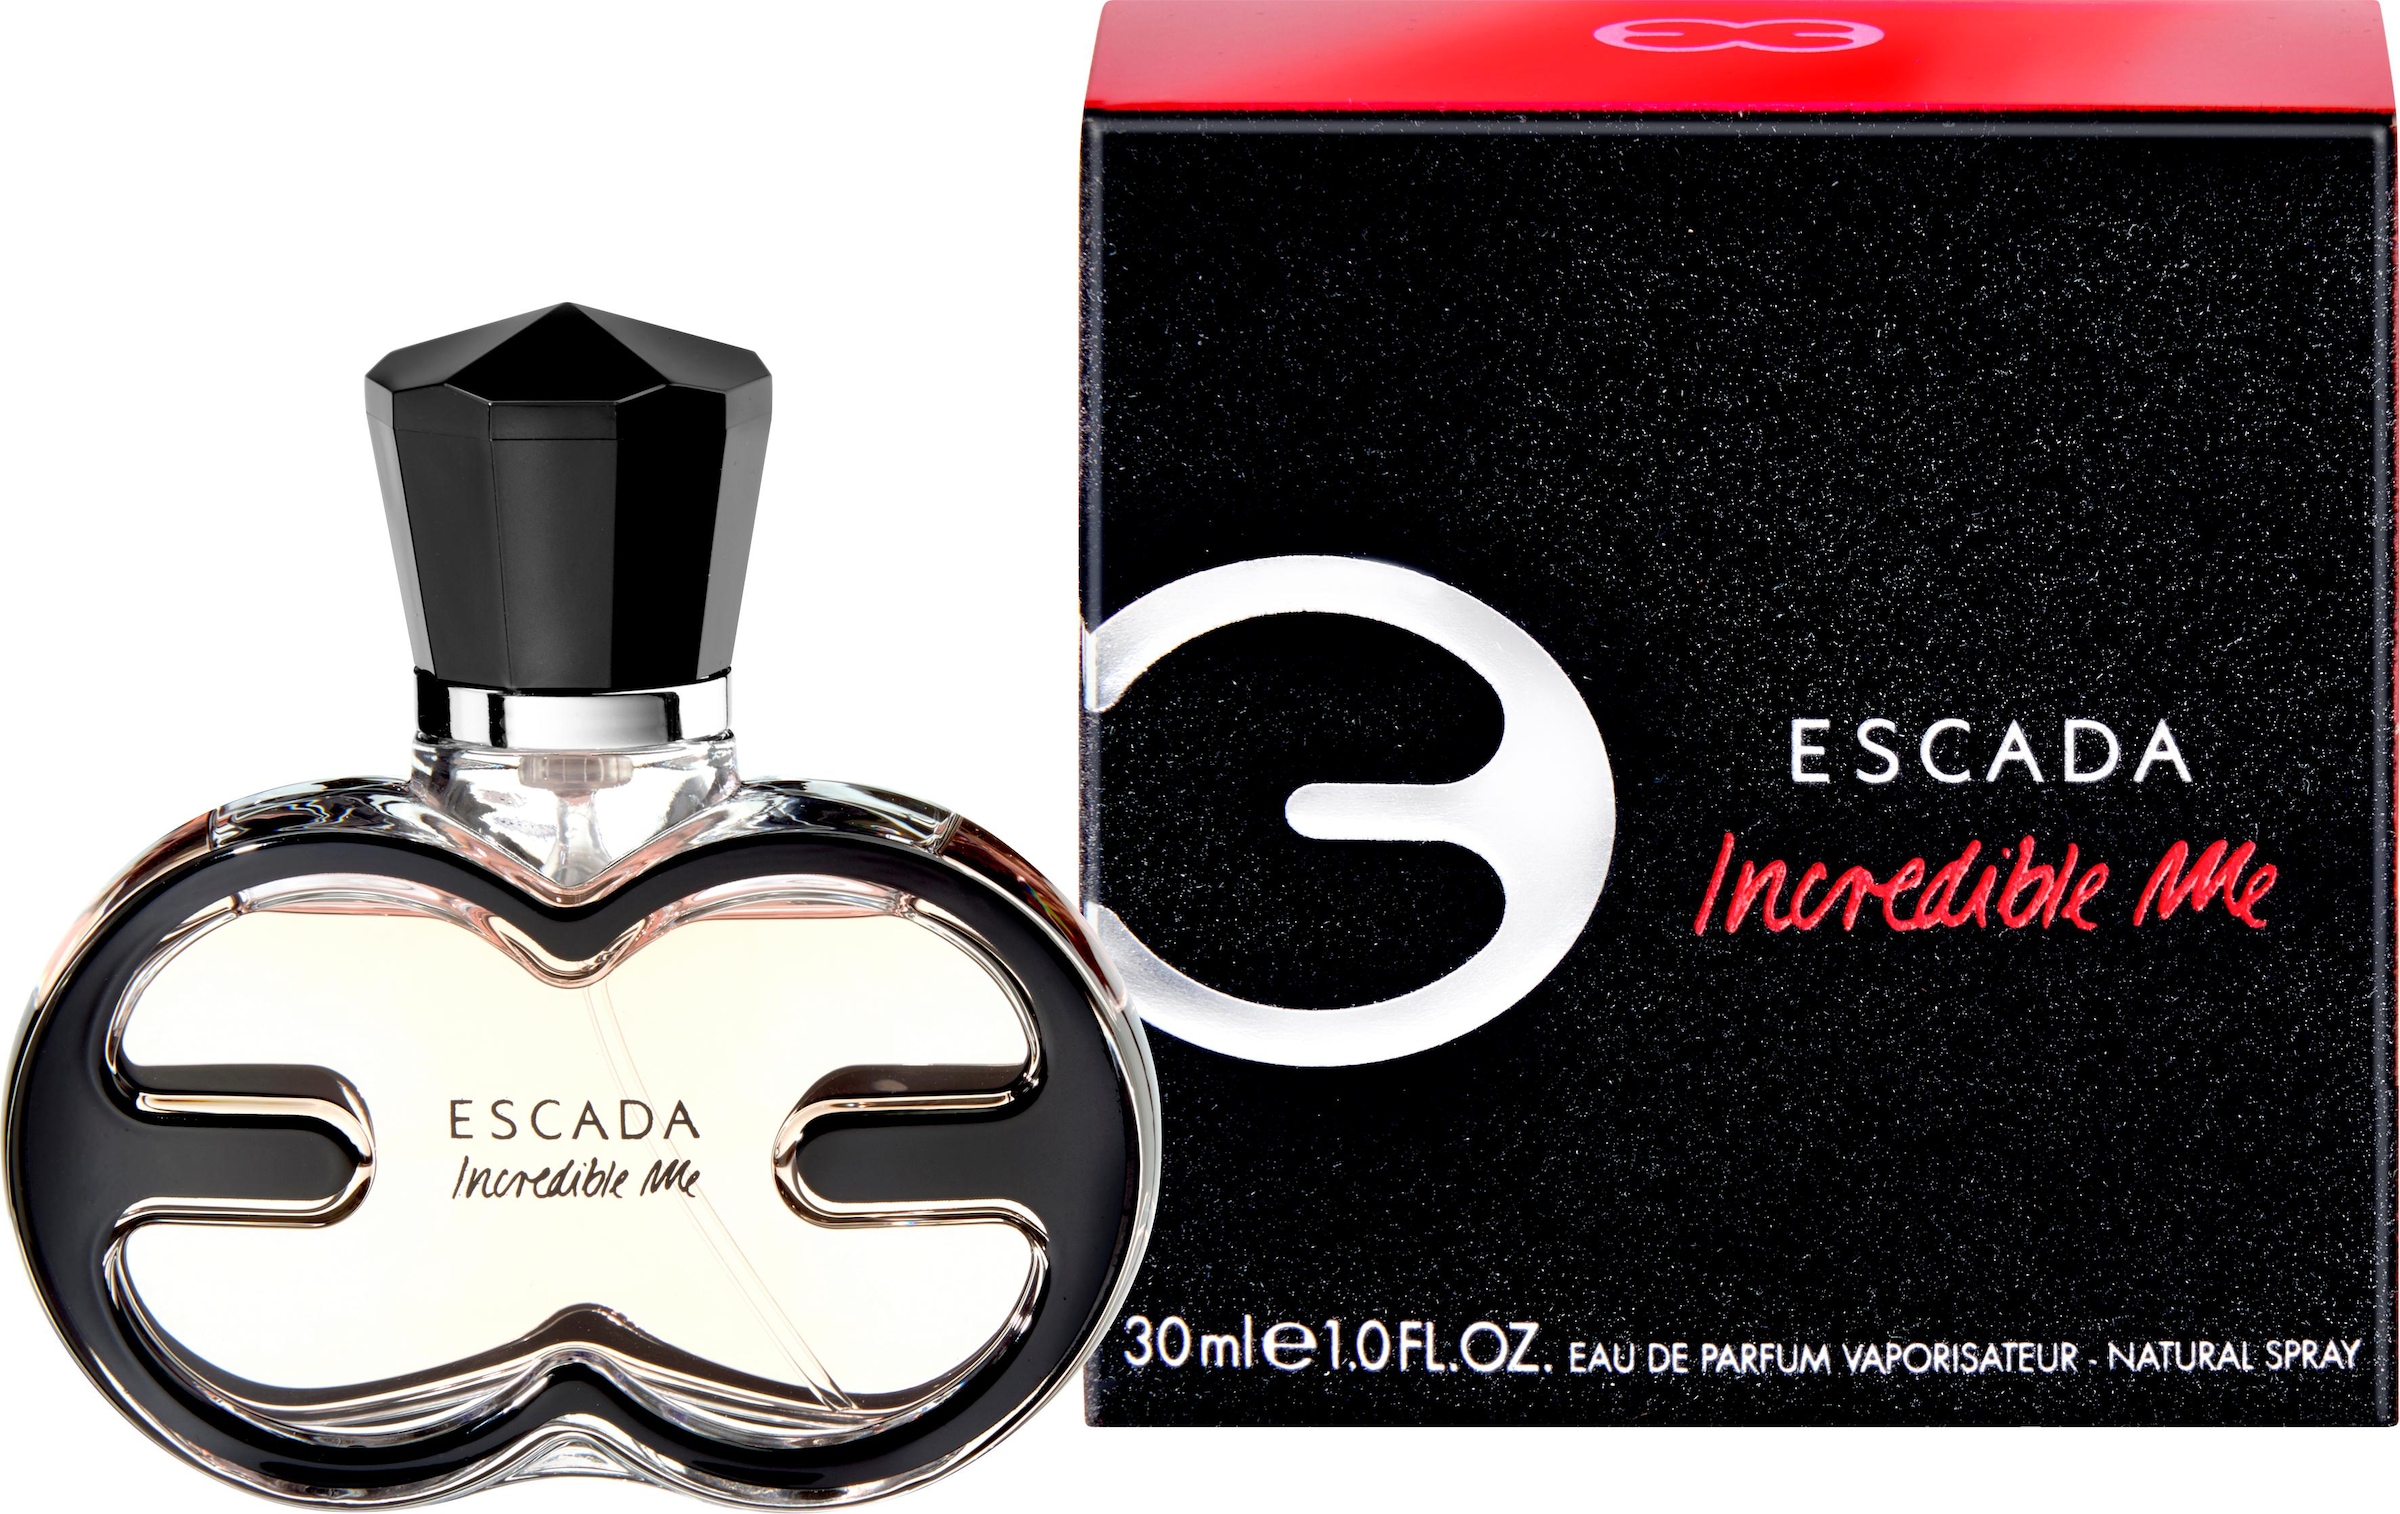 ESCADA Eau bequem de Incredible bestellen »Escada Me« Parfum